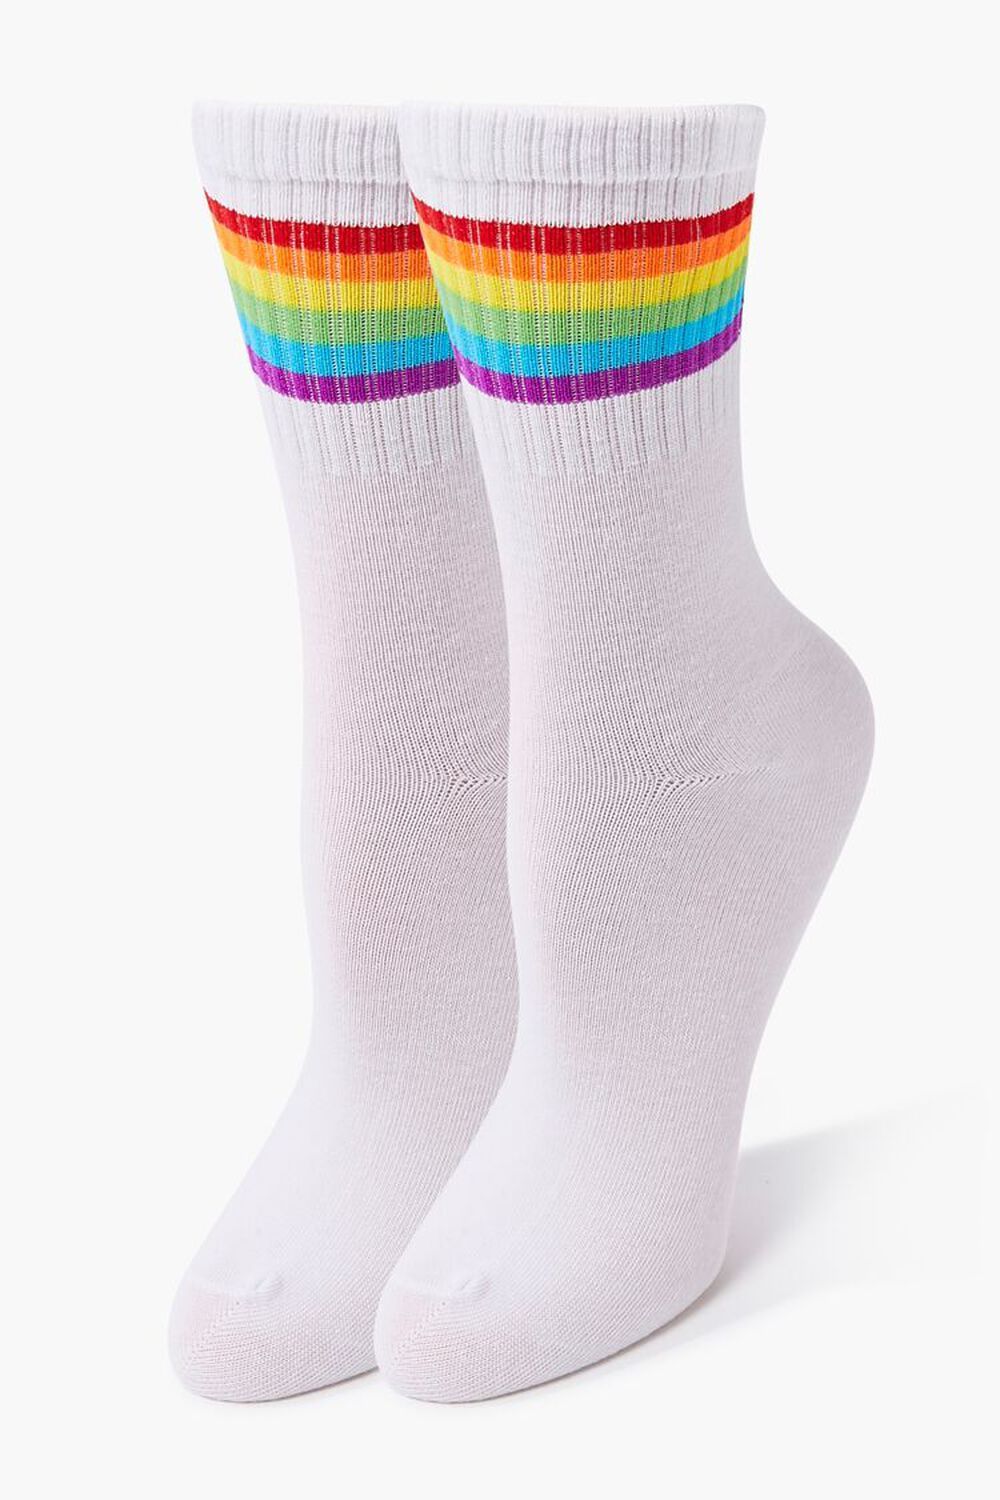 Rainbow-Trim Crew Socks | Forever 21 (US)